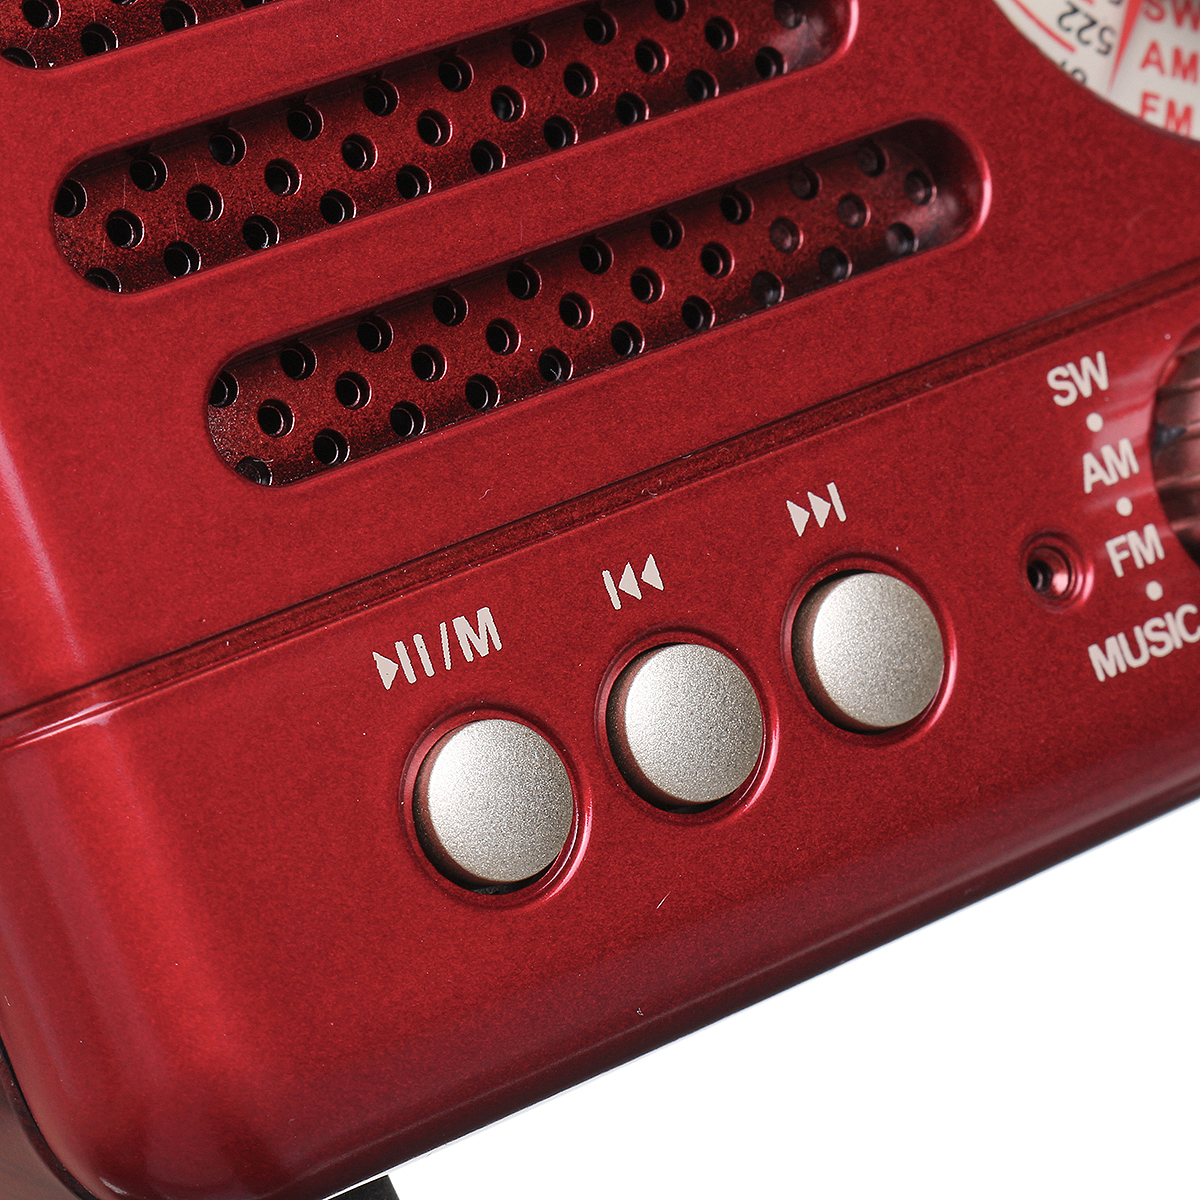 130x90x70mm Red/Coffee Portable Vintage Retro Radio AM FM SW bluetooth Speaker TF Card Slot USB Charging Home Travel Mini Radio